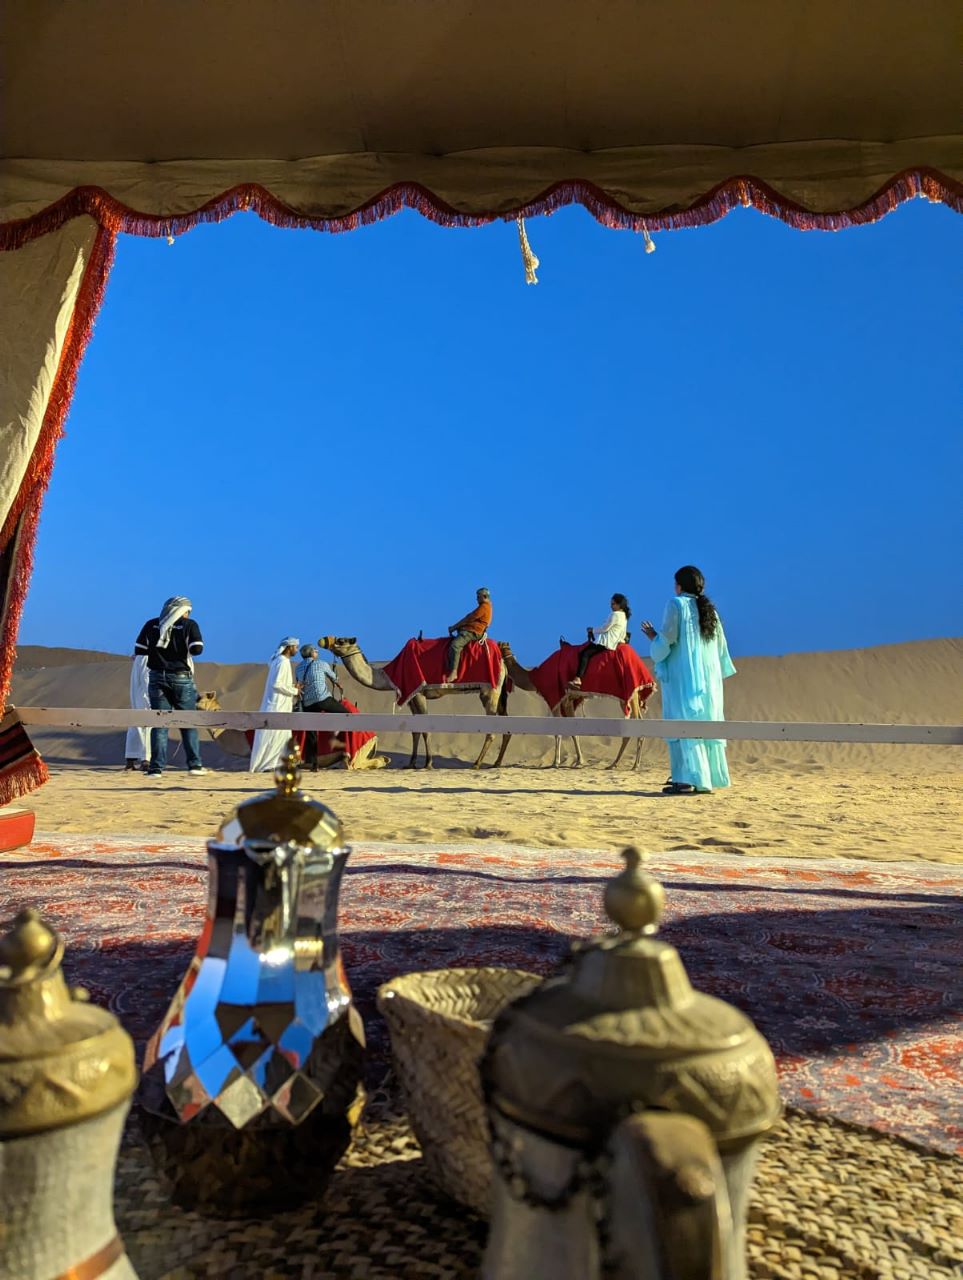 Dubai Premium Desert Safari , Dune Bashing, Sandboarding, Camel Riding, Entertainment Shows and Live Cooking Station - Tripventura